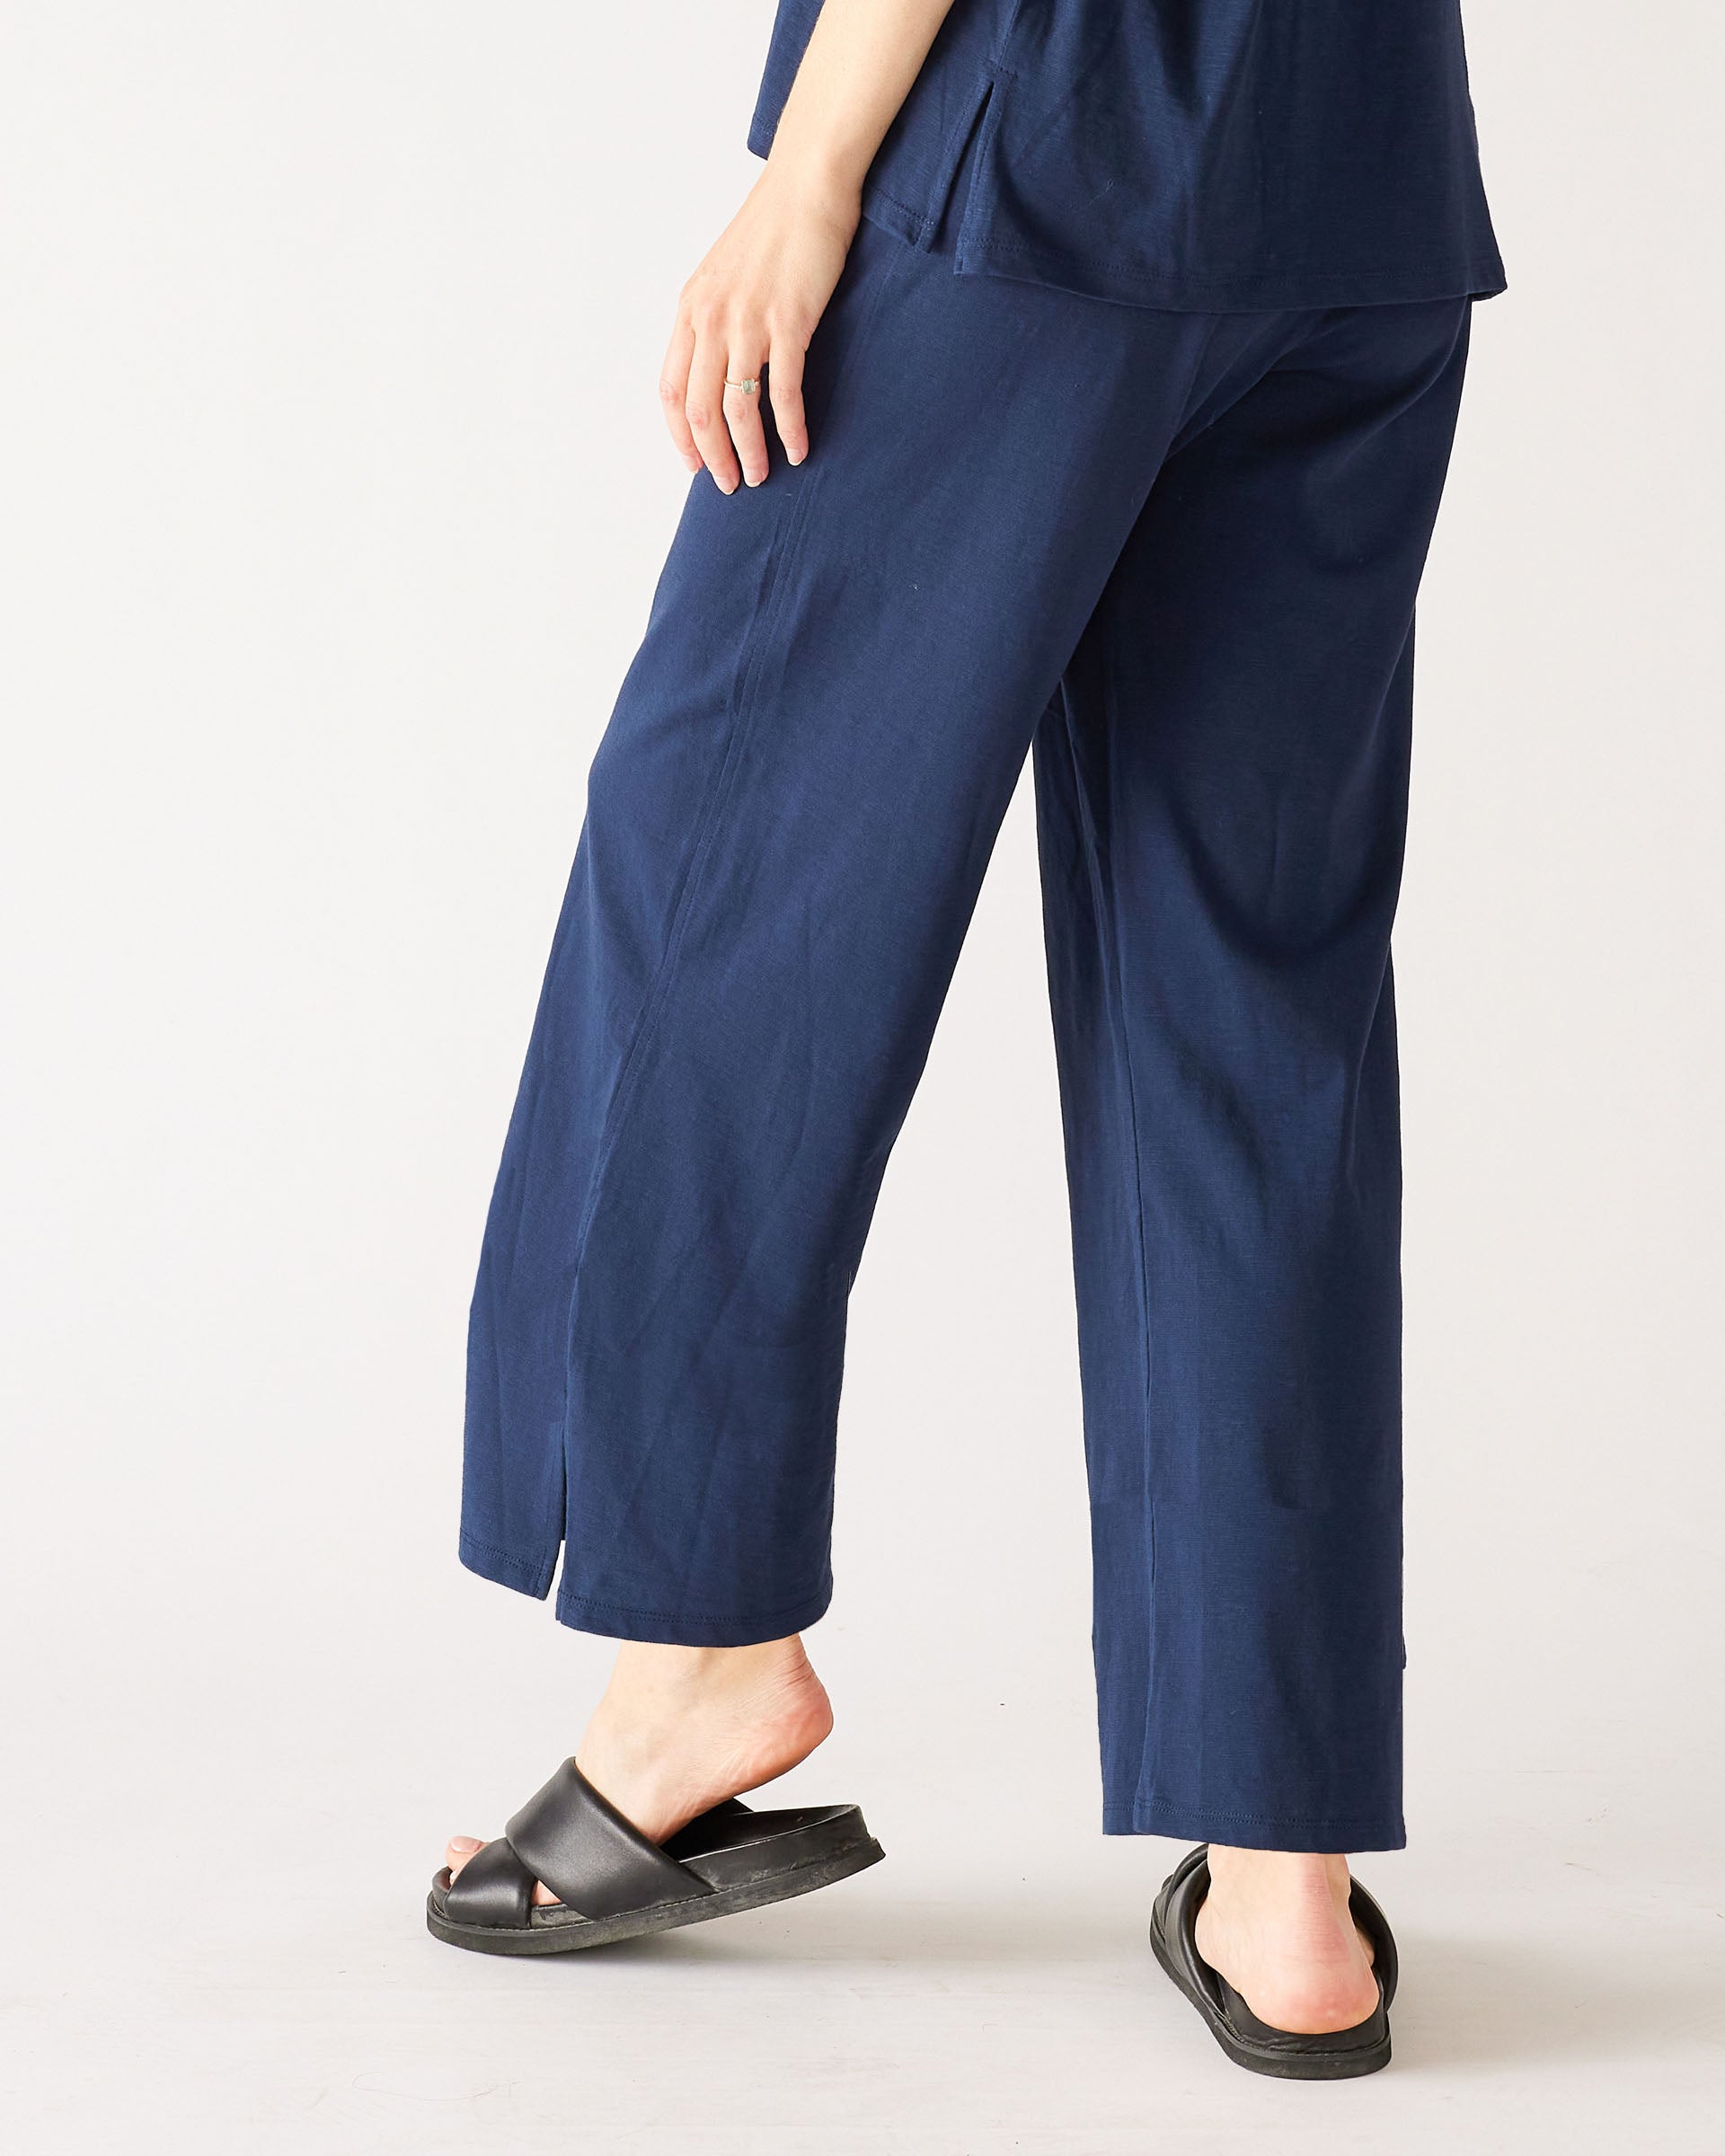 Women's Navy Blue Wide Leg Ankle side Slit Elastic Waist Pant Rear View Walking